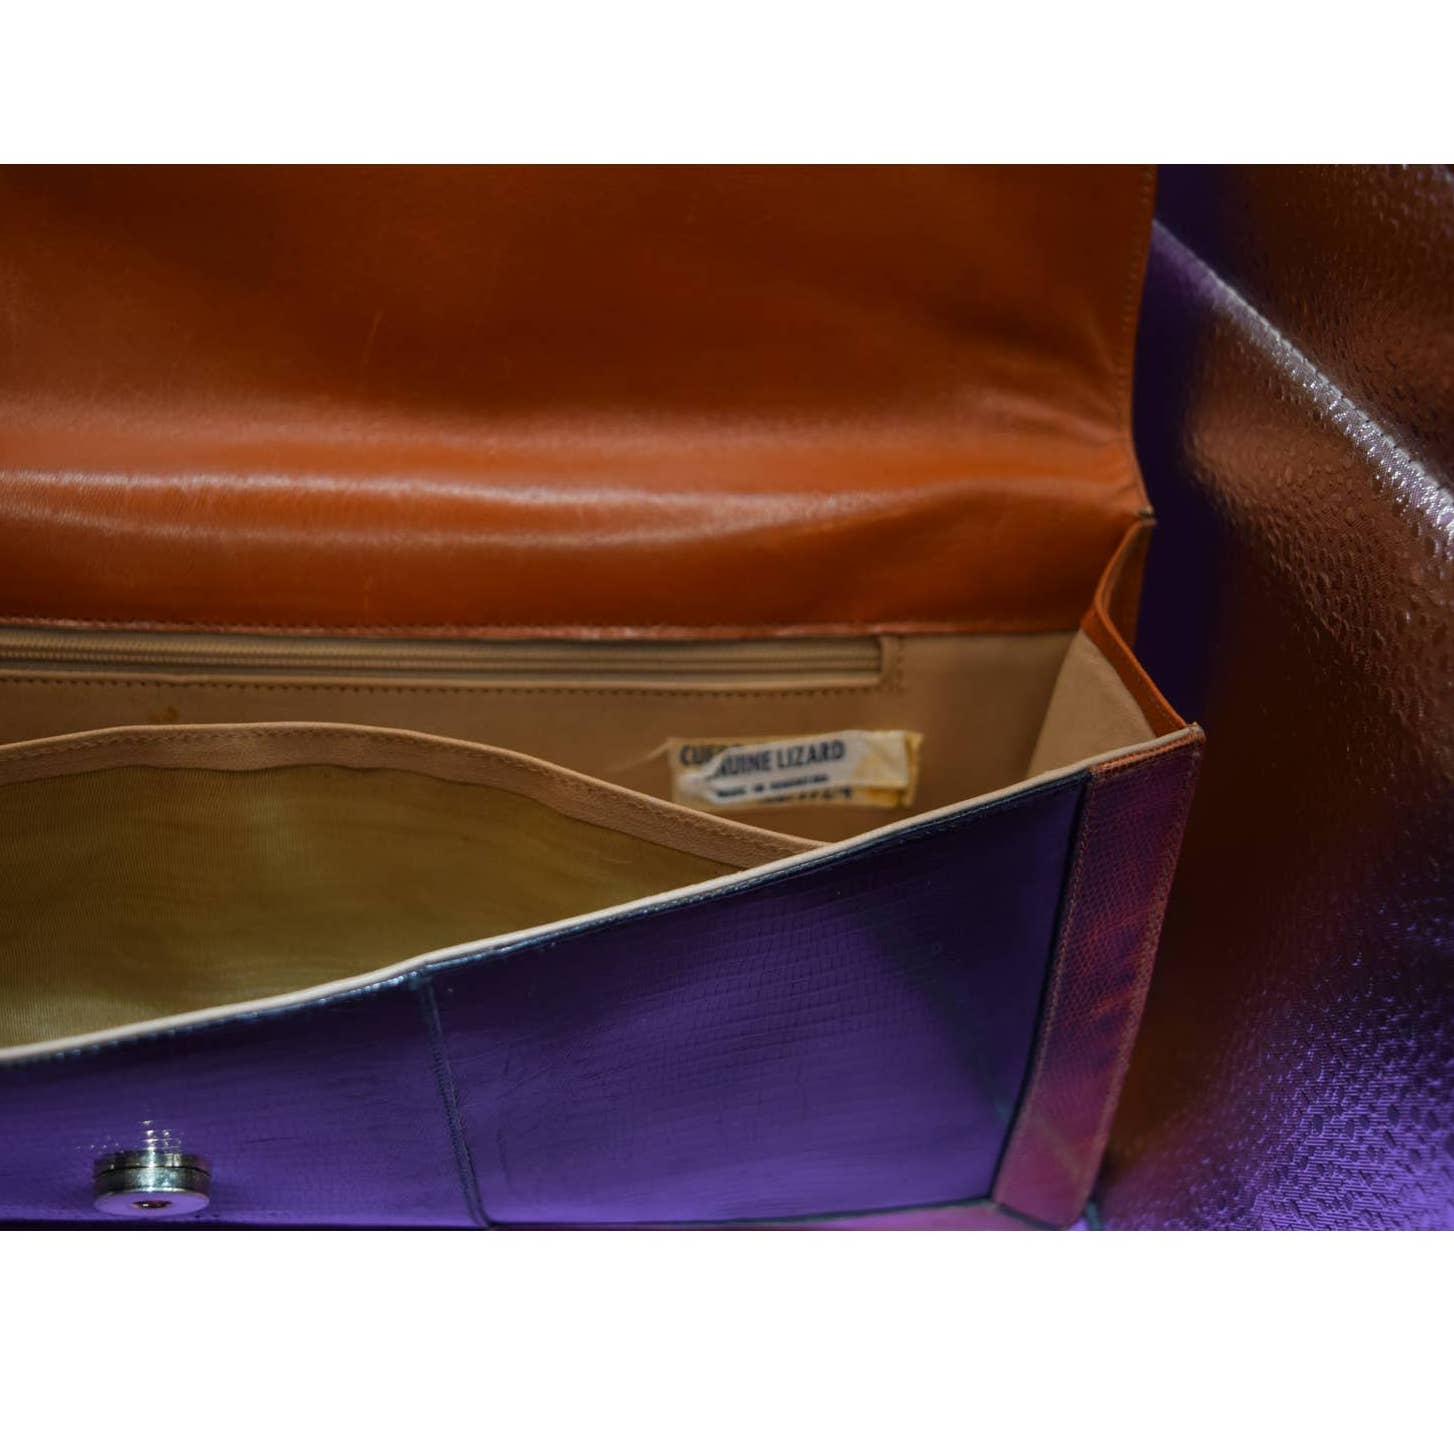 Towanny Black and Brown Genuine Lizard Leather Clutch Handbag